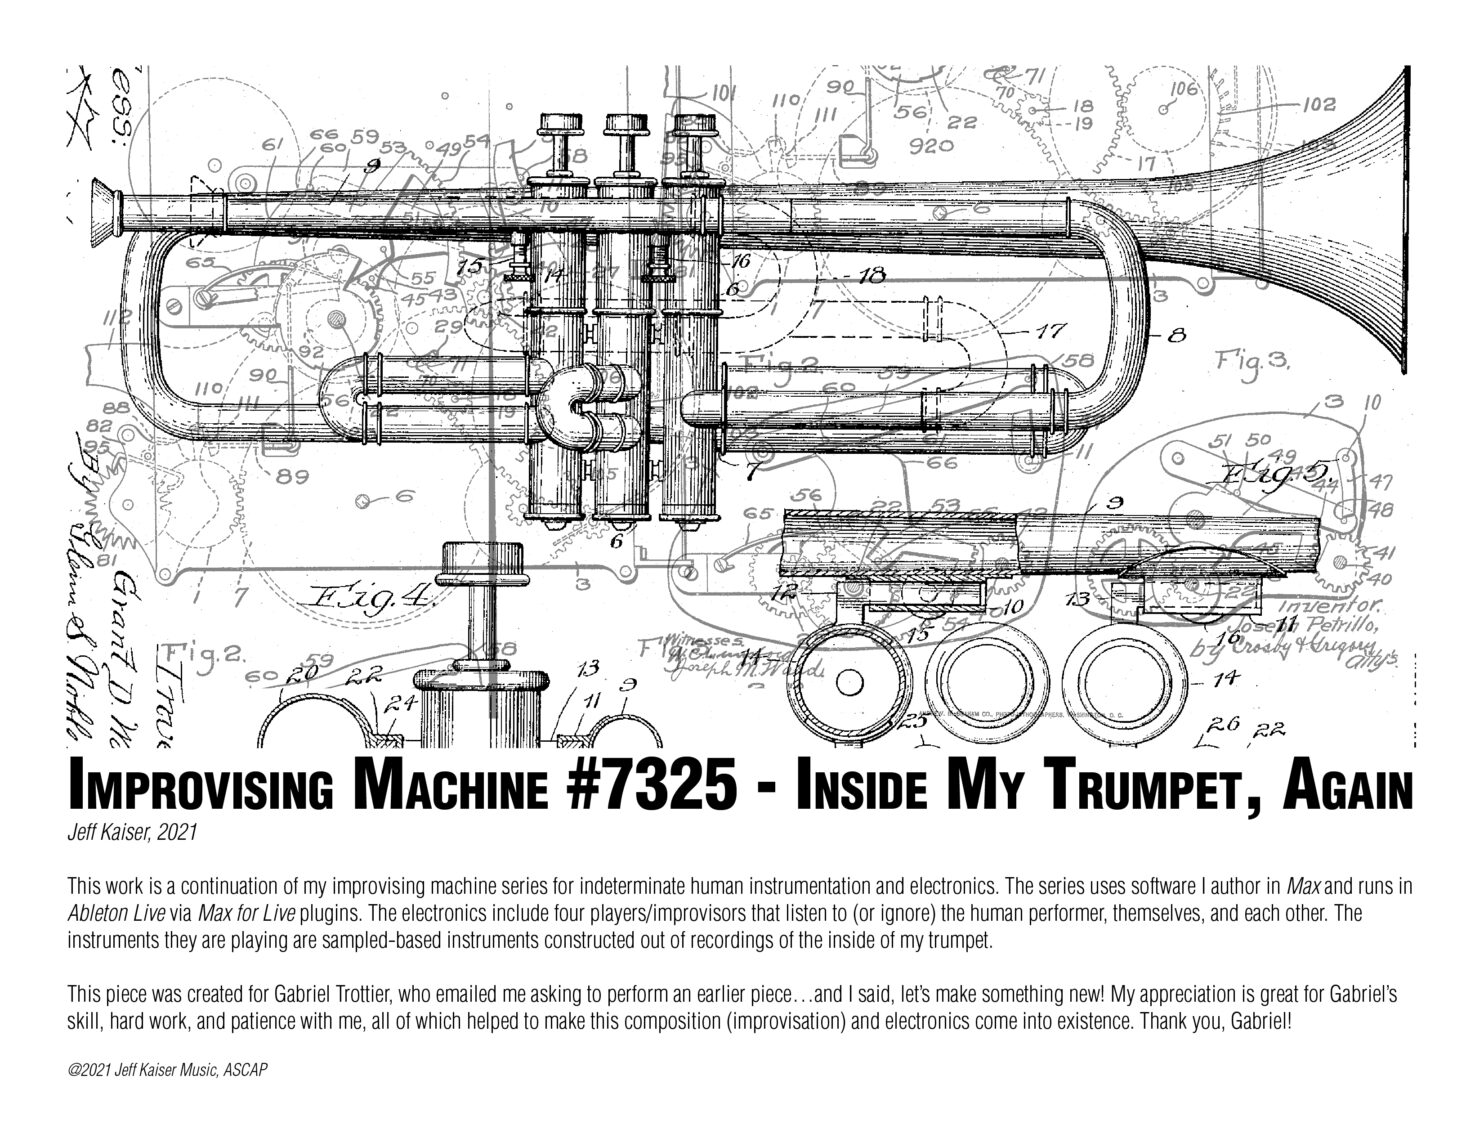 Improvising machine #7325 - Inside my trumpet, again